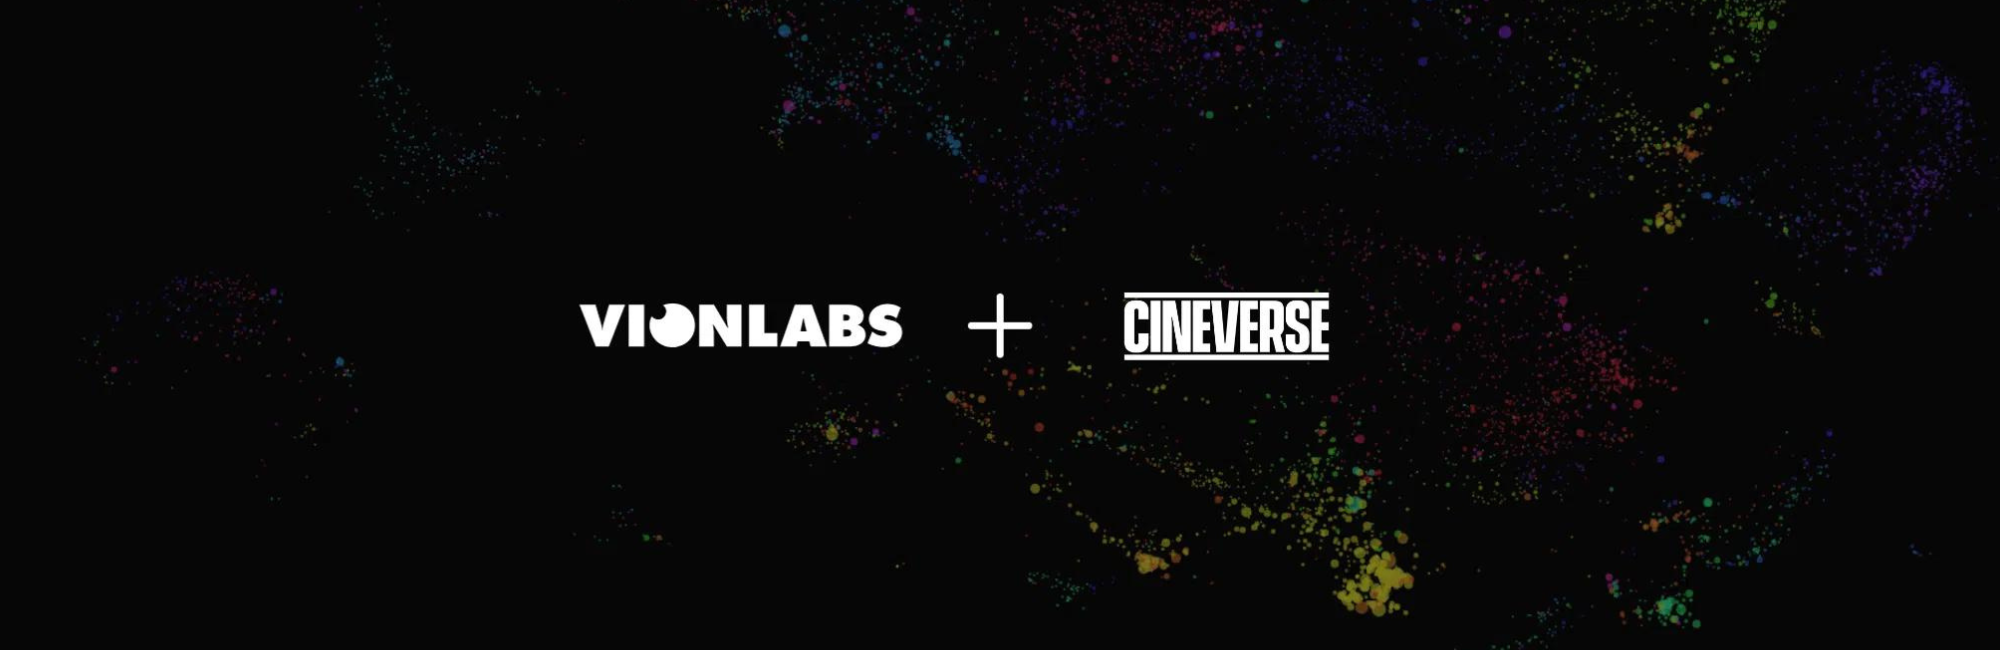 Vionlabs and Cineverse